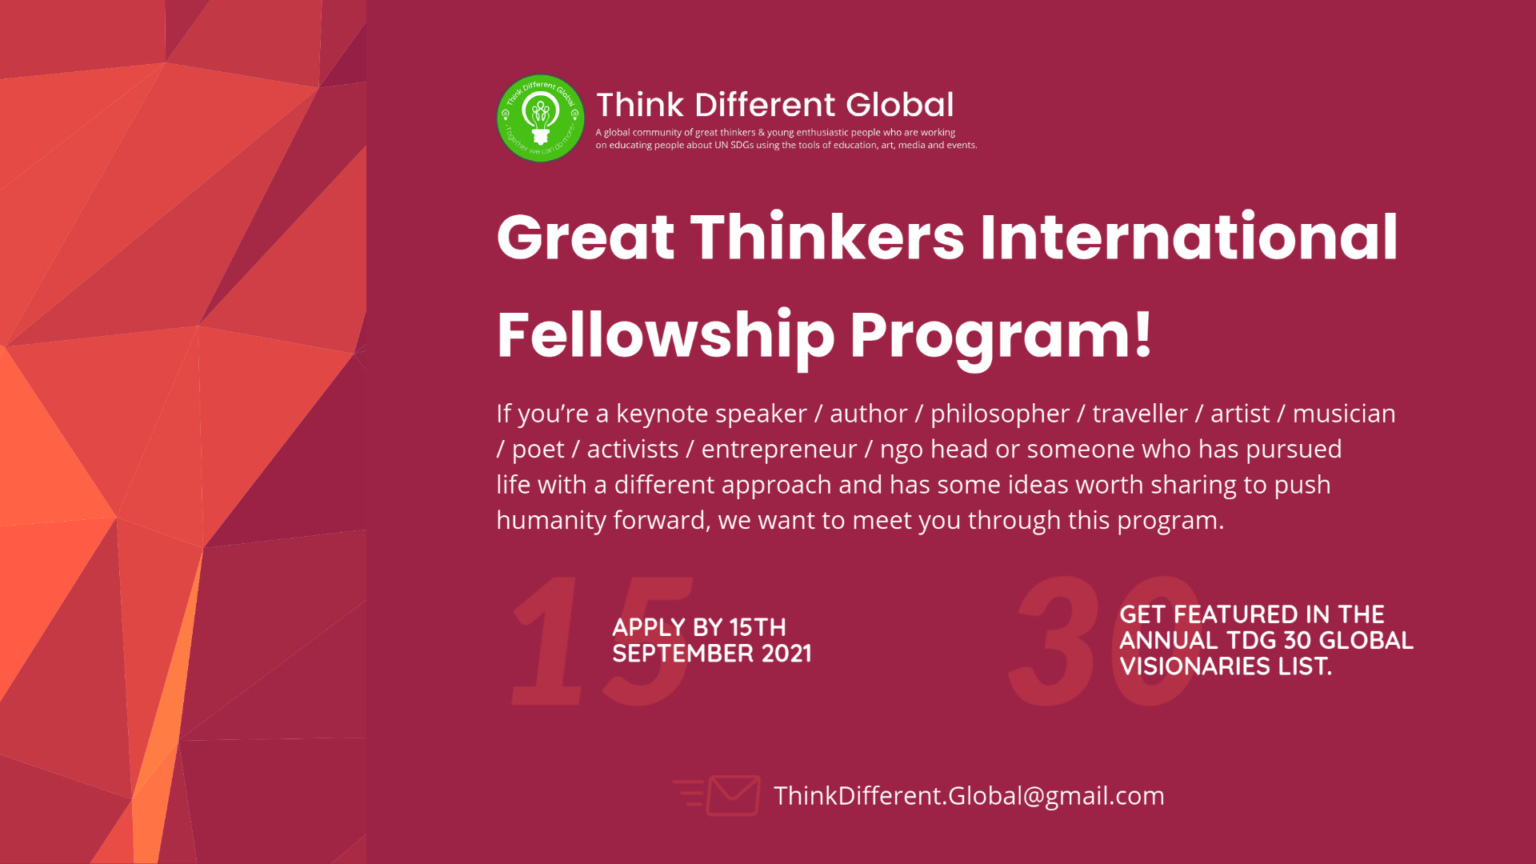 Great Thinkers International Fellowship Program